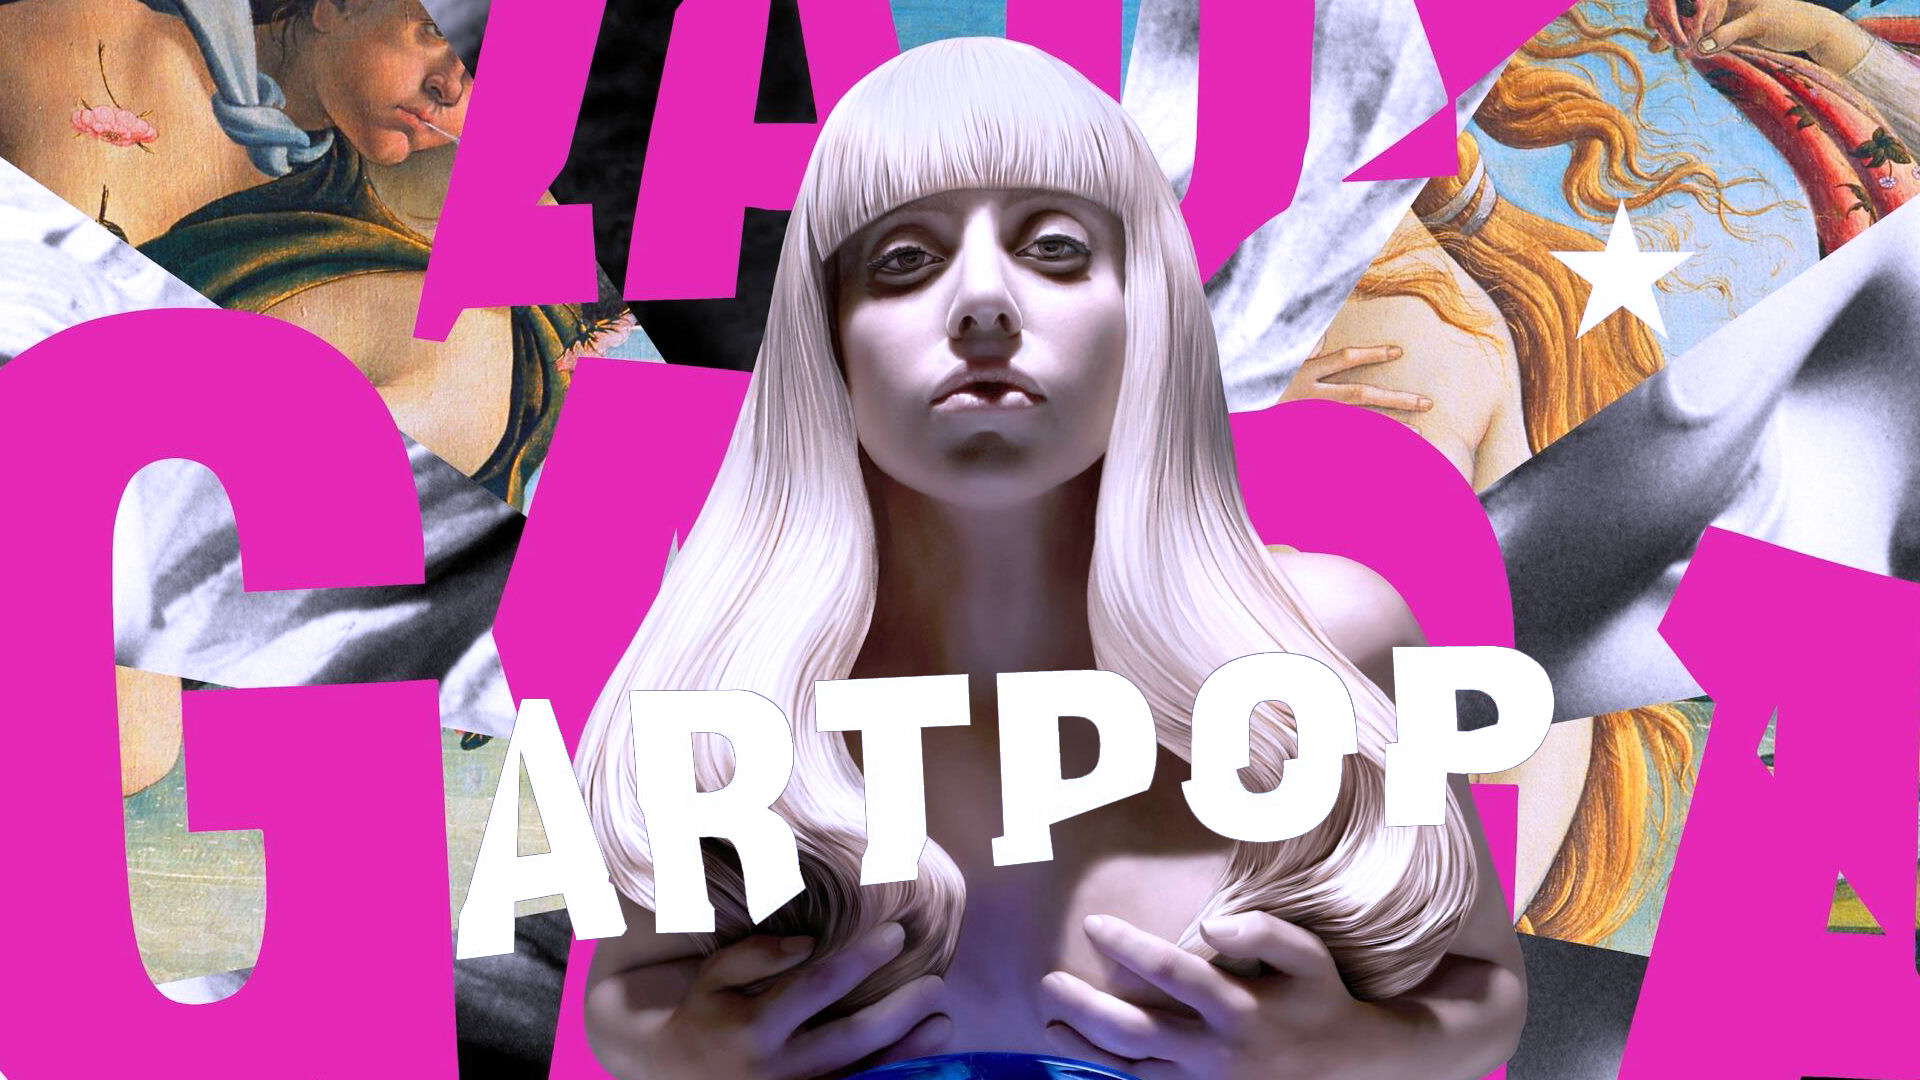 Cool-Lady-Gaga-Artpop-Background.jpg